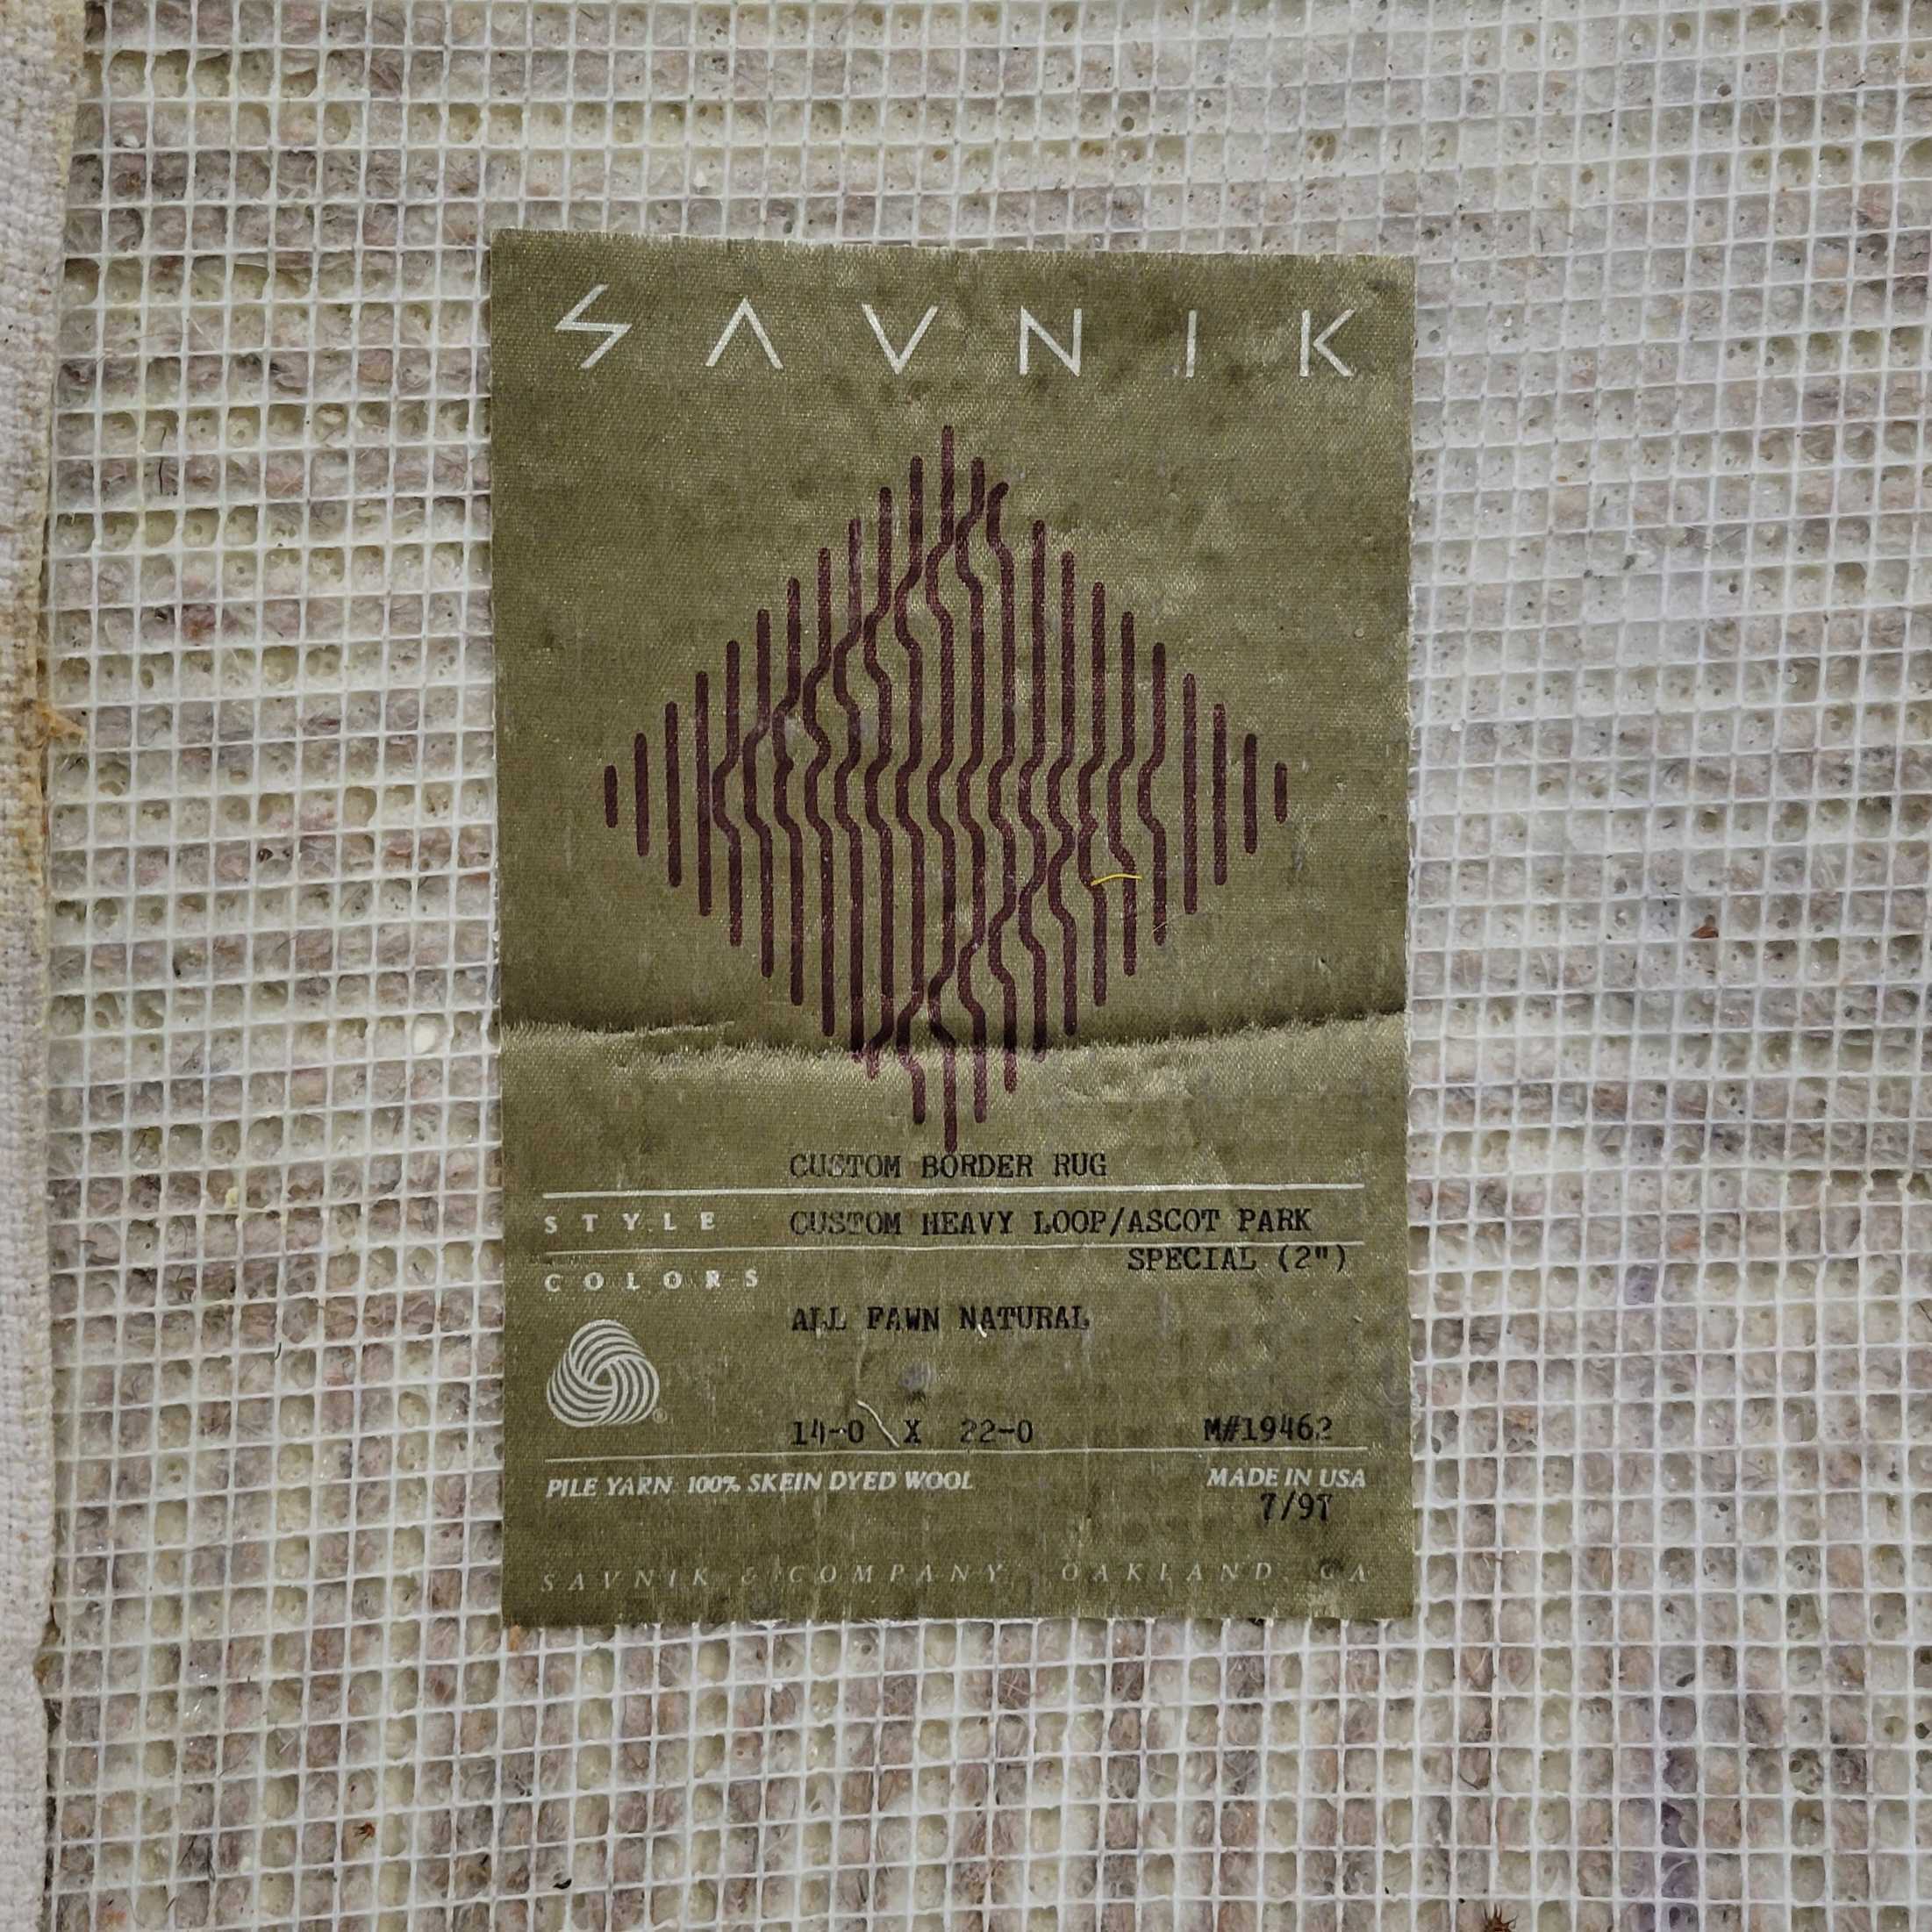 14'x 22' Savnik Fawn Natural Heavy Loop Custom Border Skein Dyed Wool Rug